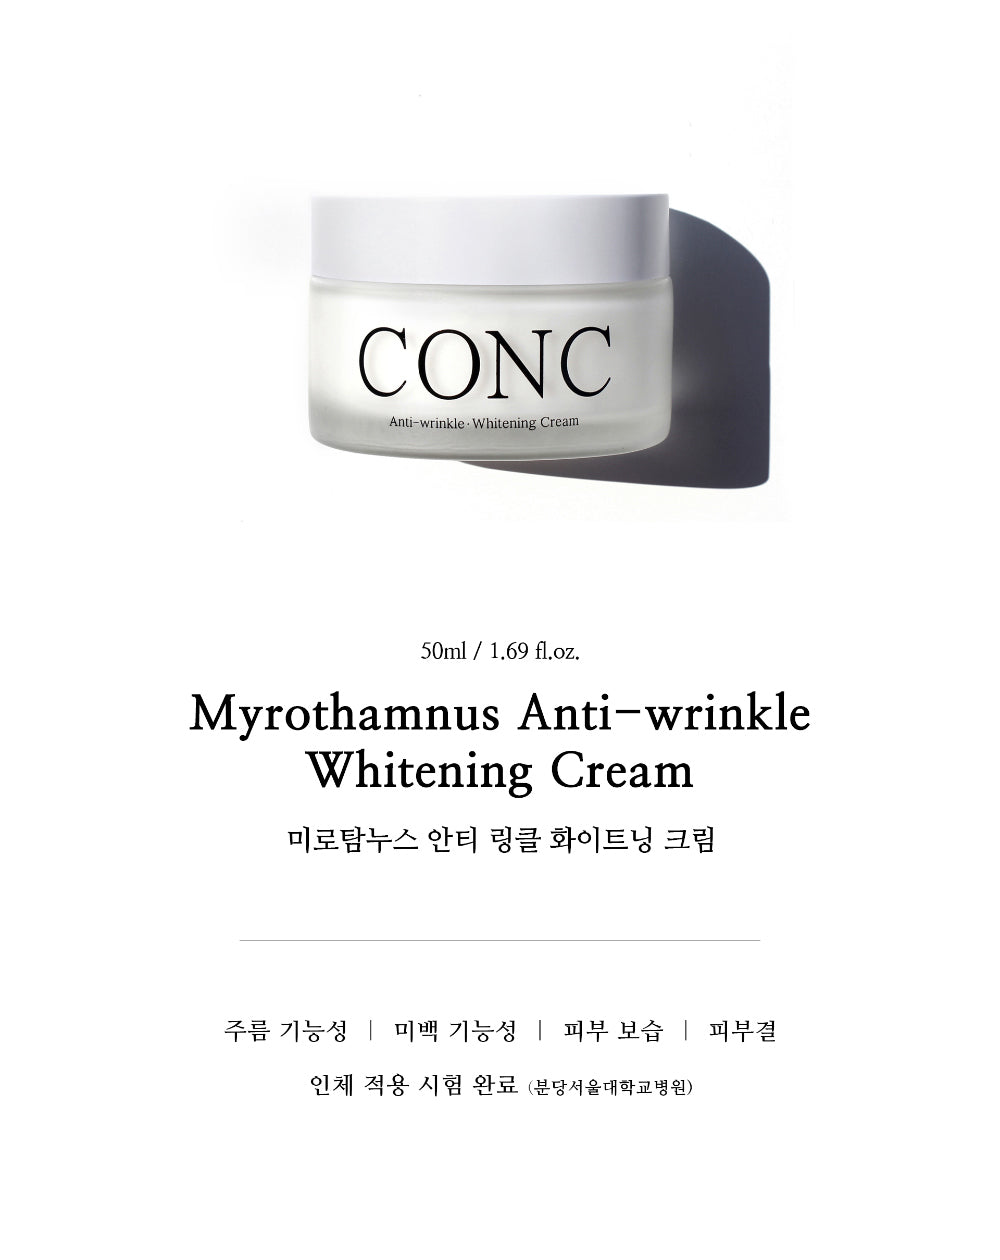 CONC Myrothamnus Anti-wrinkle Whitening Cream 50ml 1.69fl.oz.